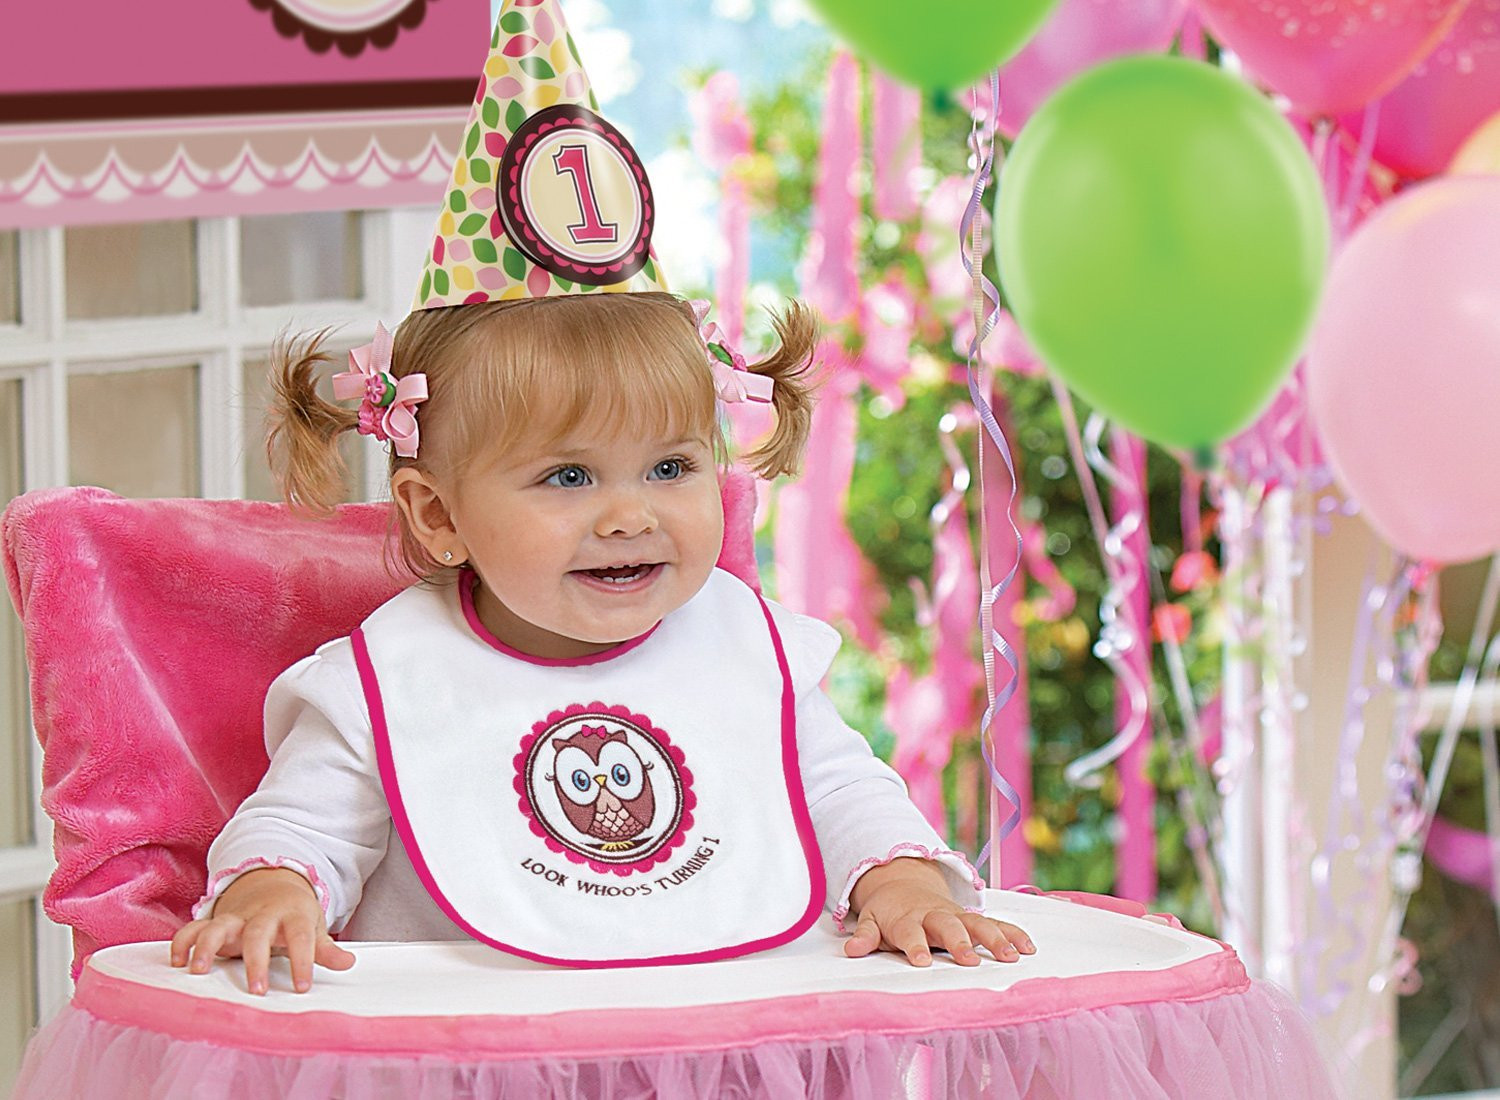 Baby Girl First Birthday Party Ideas
 22 Fun Ideas For Your Baby Girl s First Birthday Shoot